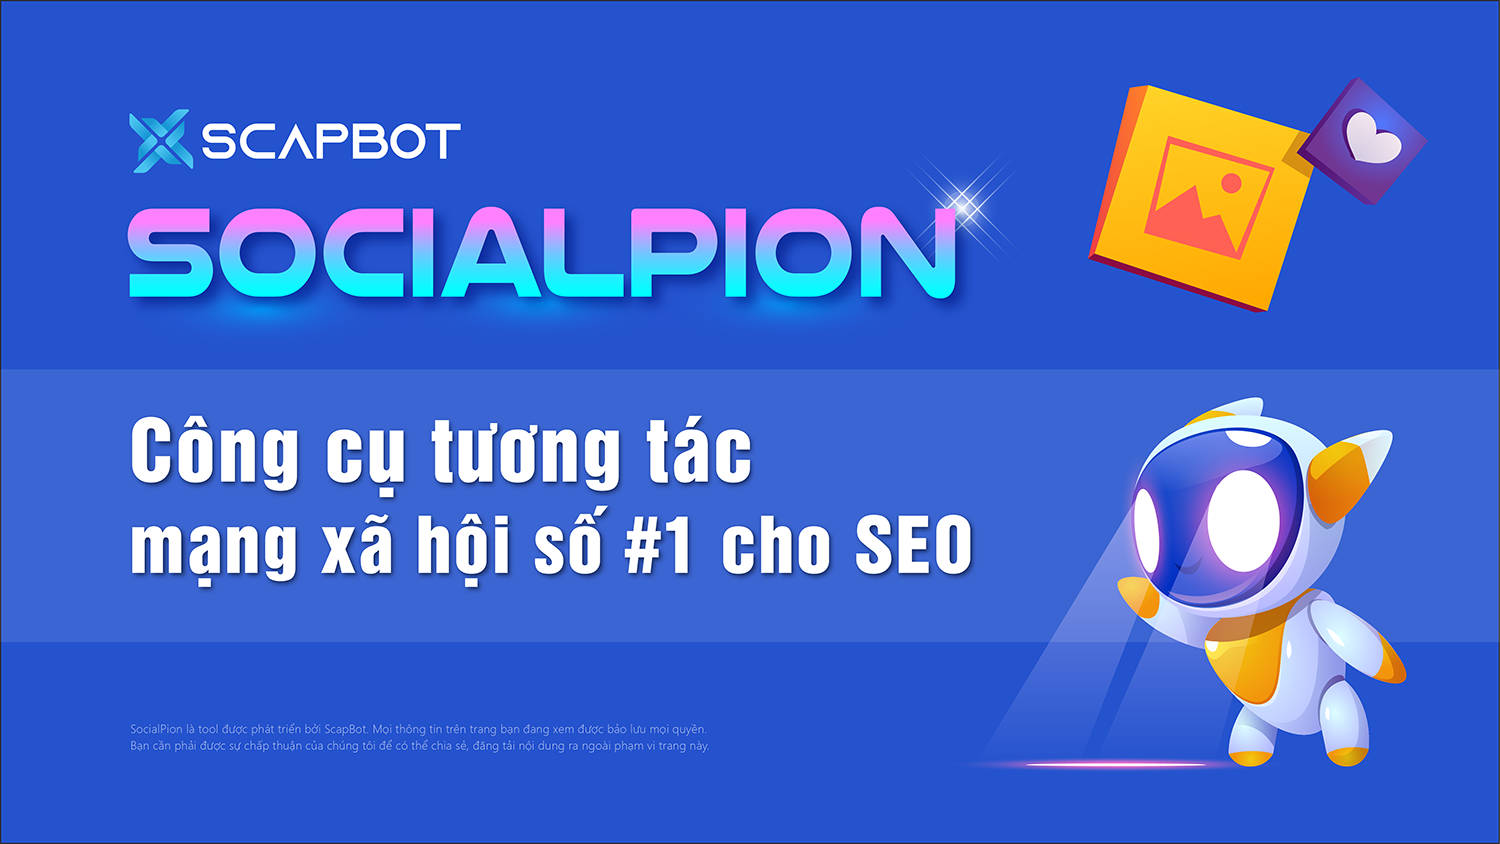 socialpion-blog-featured-image